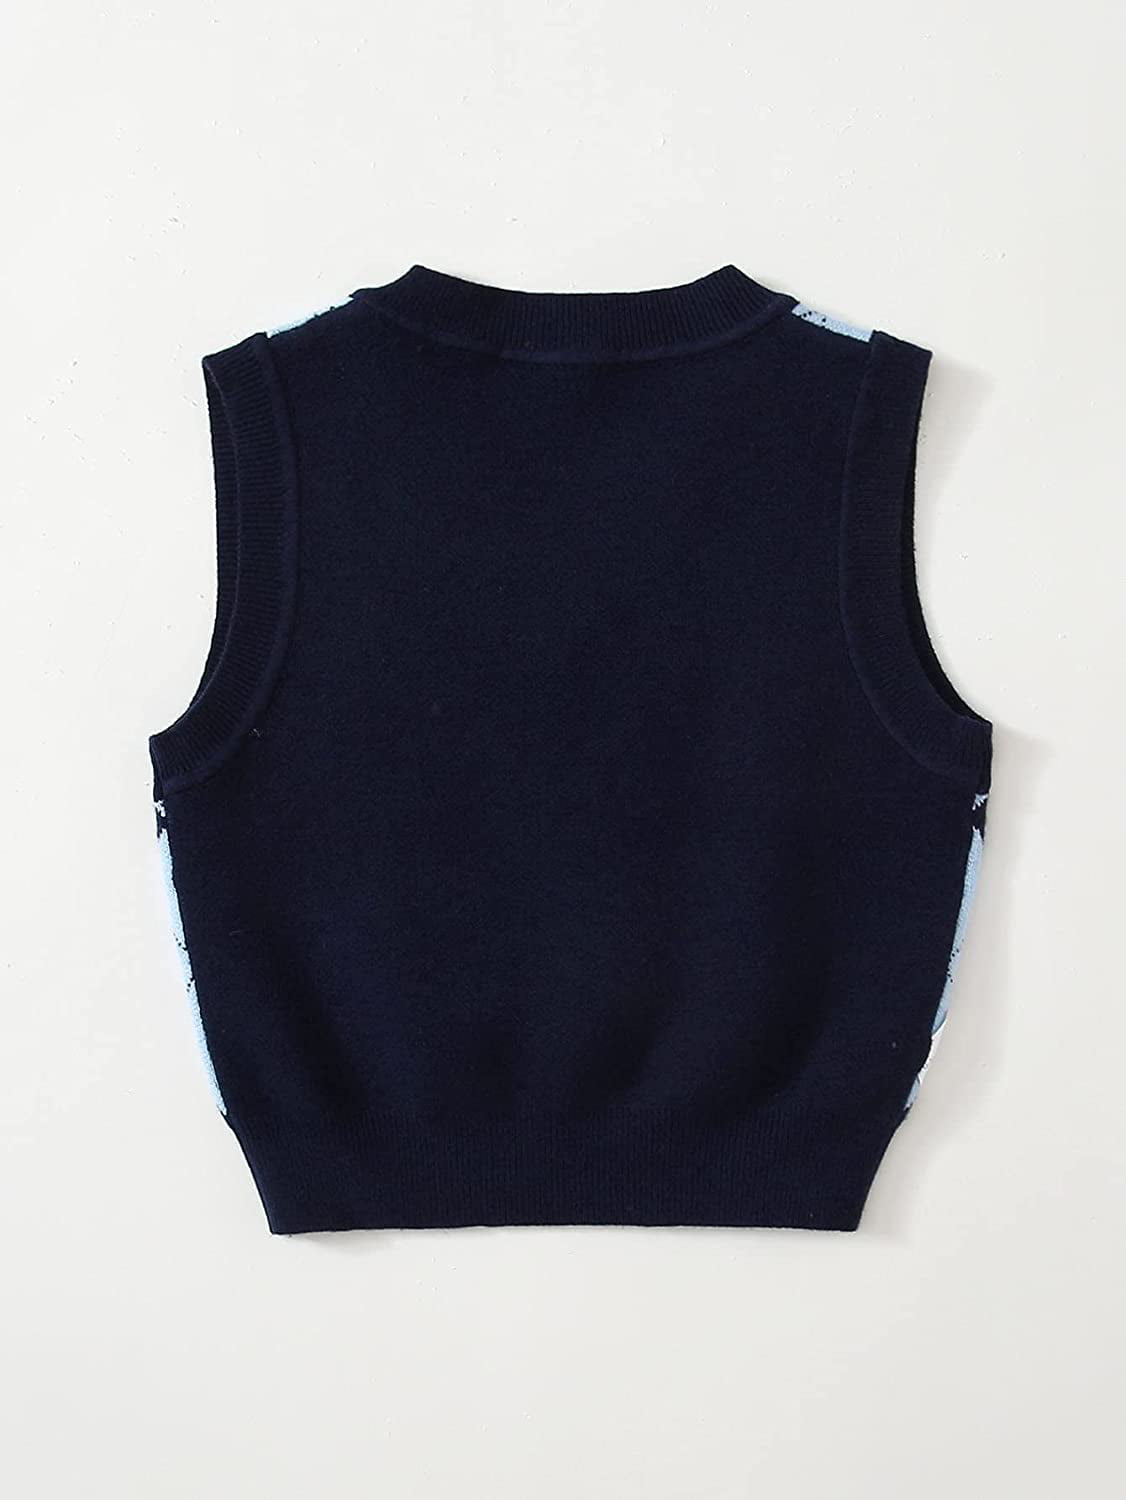 Milumia Girl's Casual Argyle Plaid Sweater Vest Round Neck Sleeveless Crop Top 